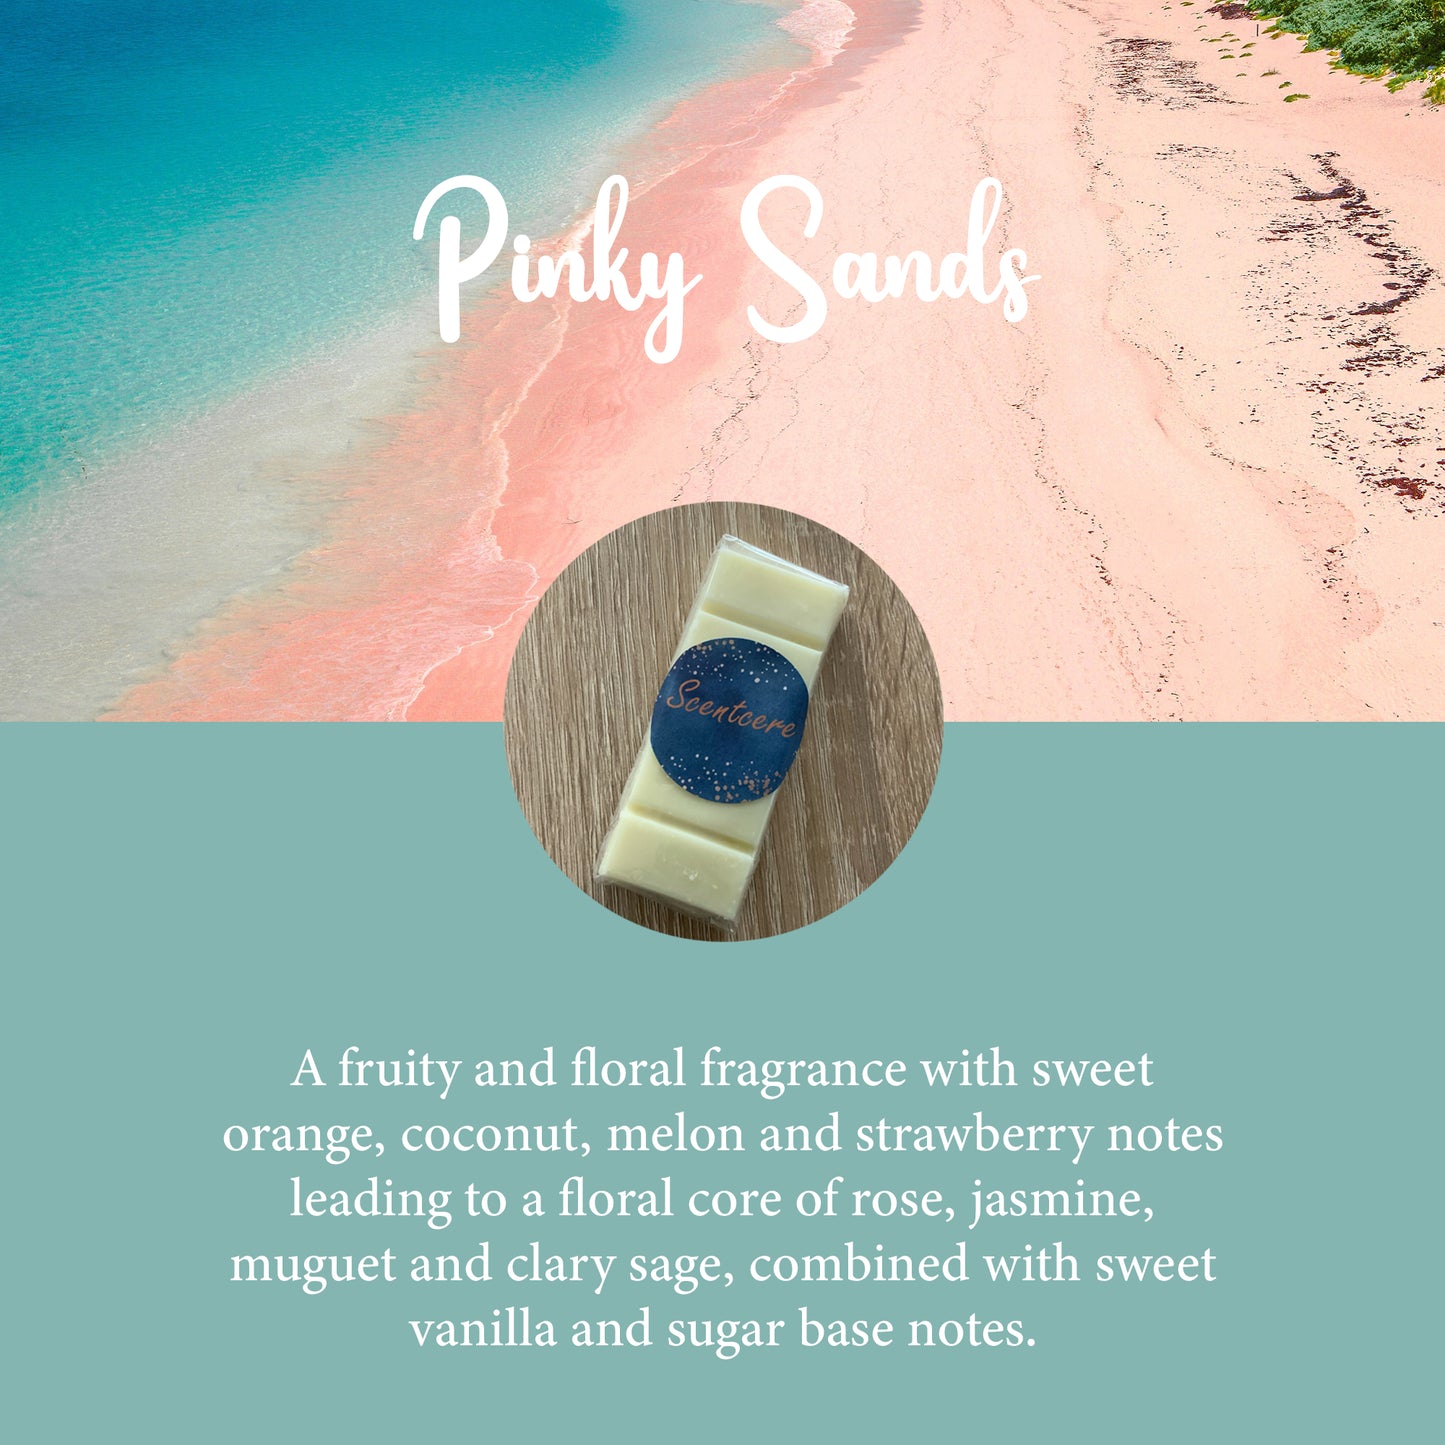 Pinky sands